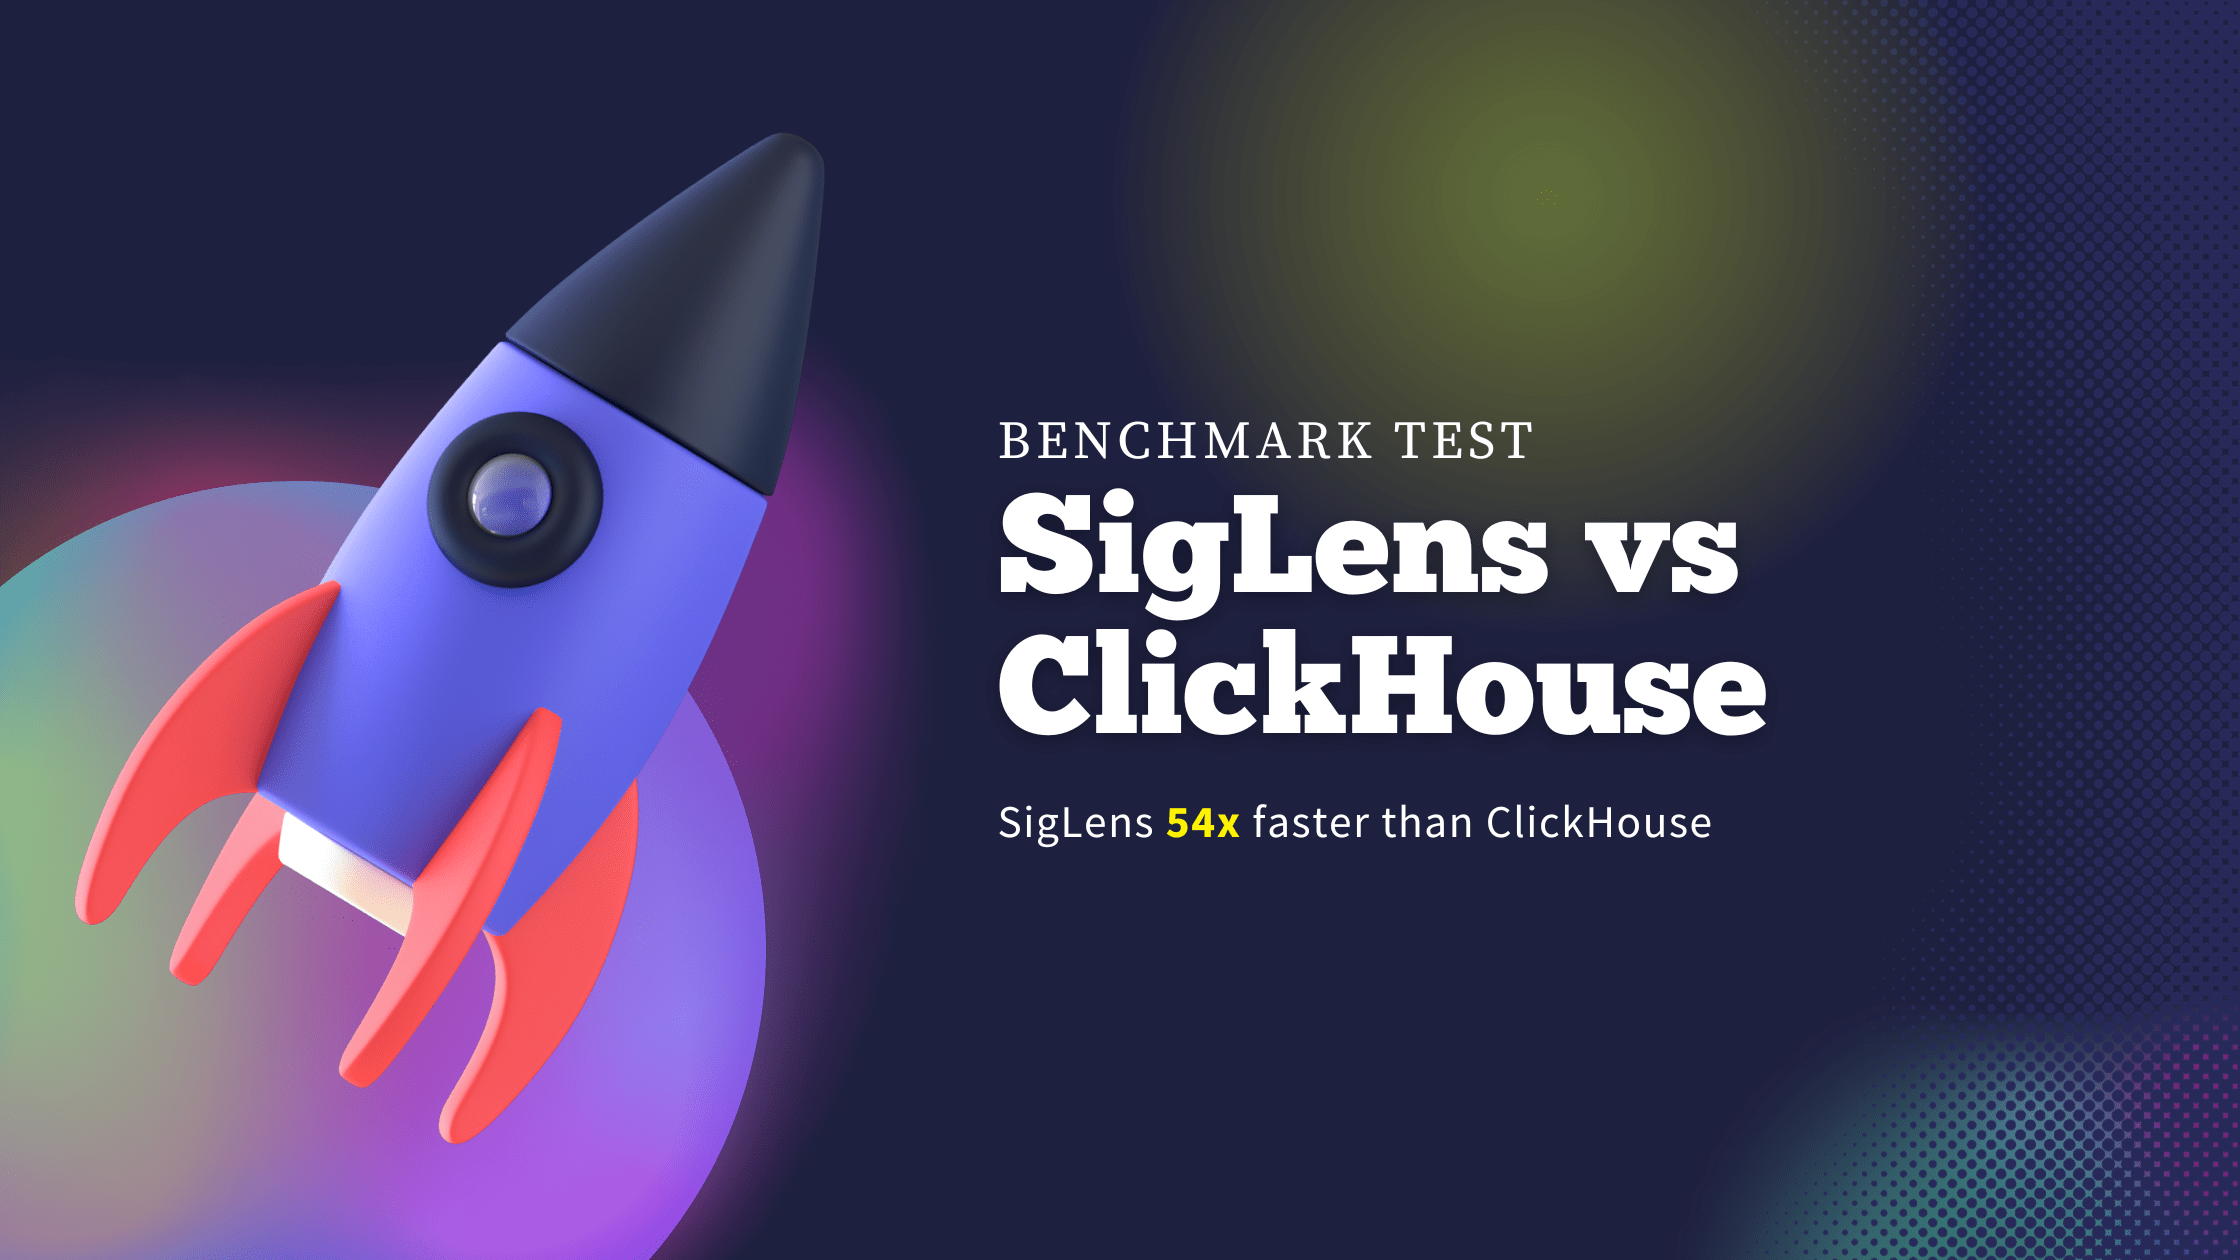 SigLens 54x faster than ClickHouse